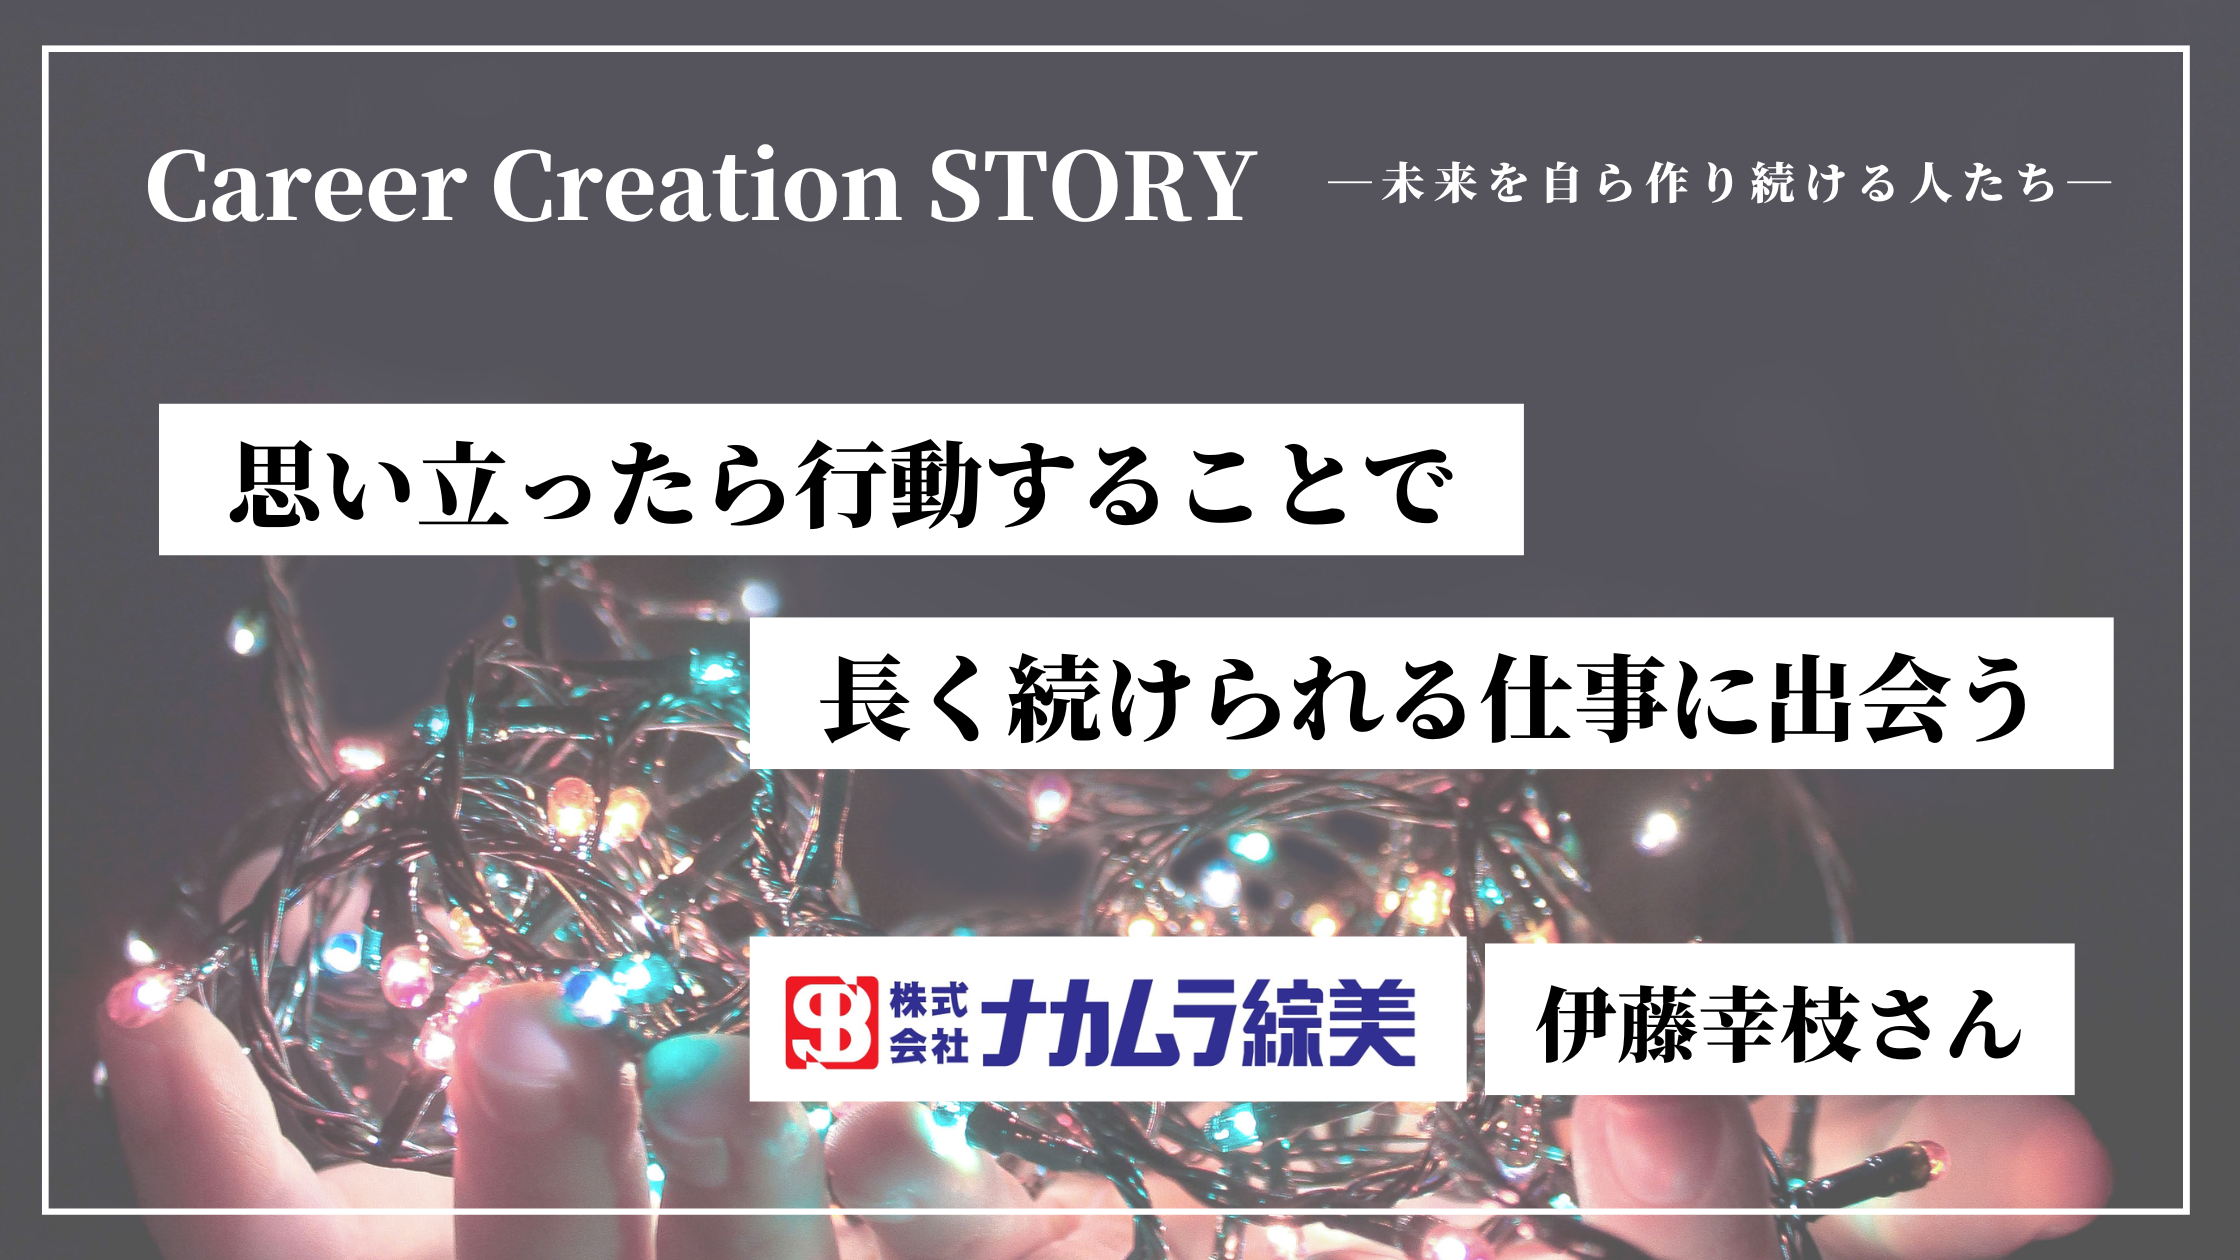 Career Creation STORY #2：ソフトバンク（株）佃直樹さん